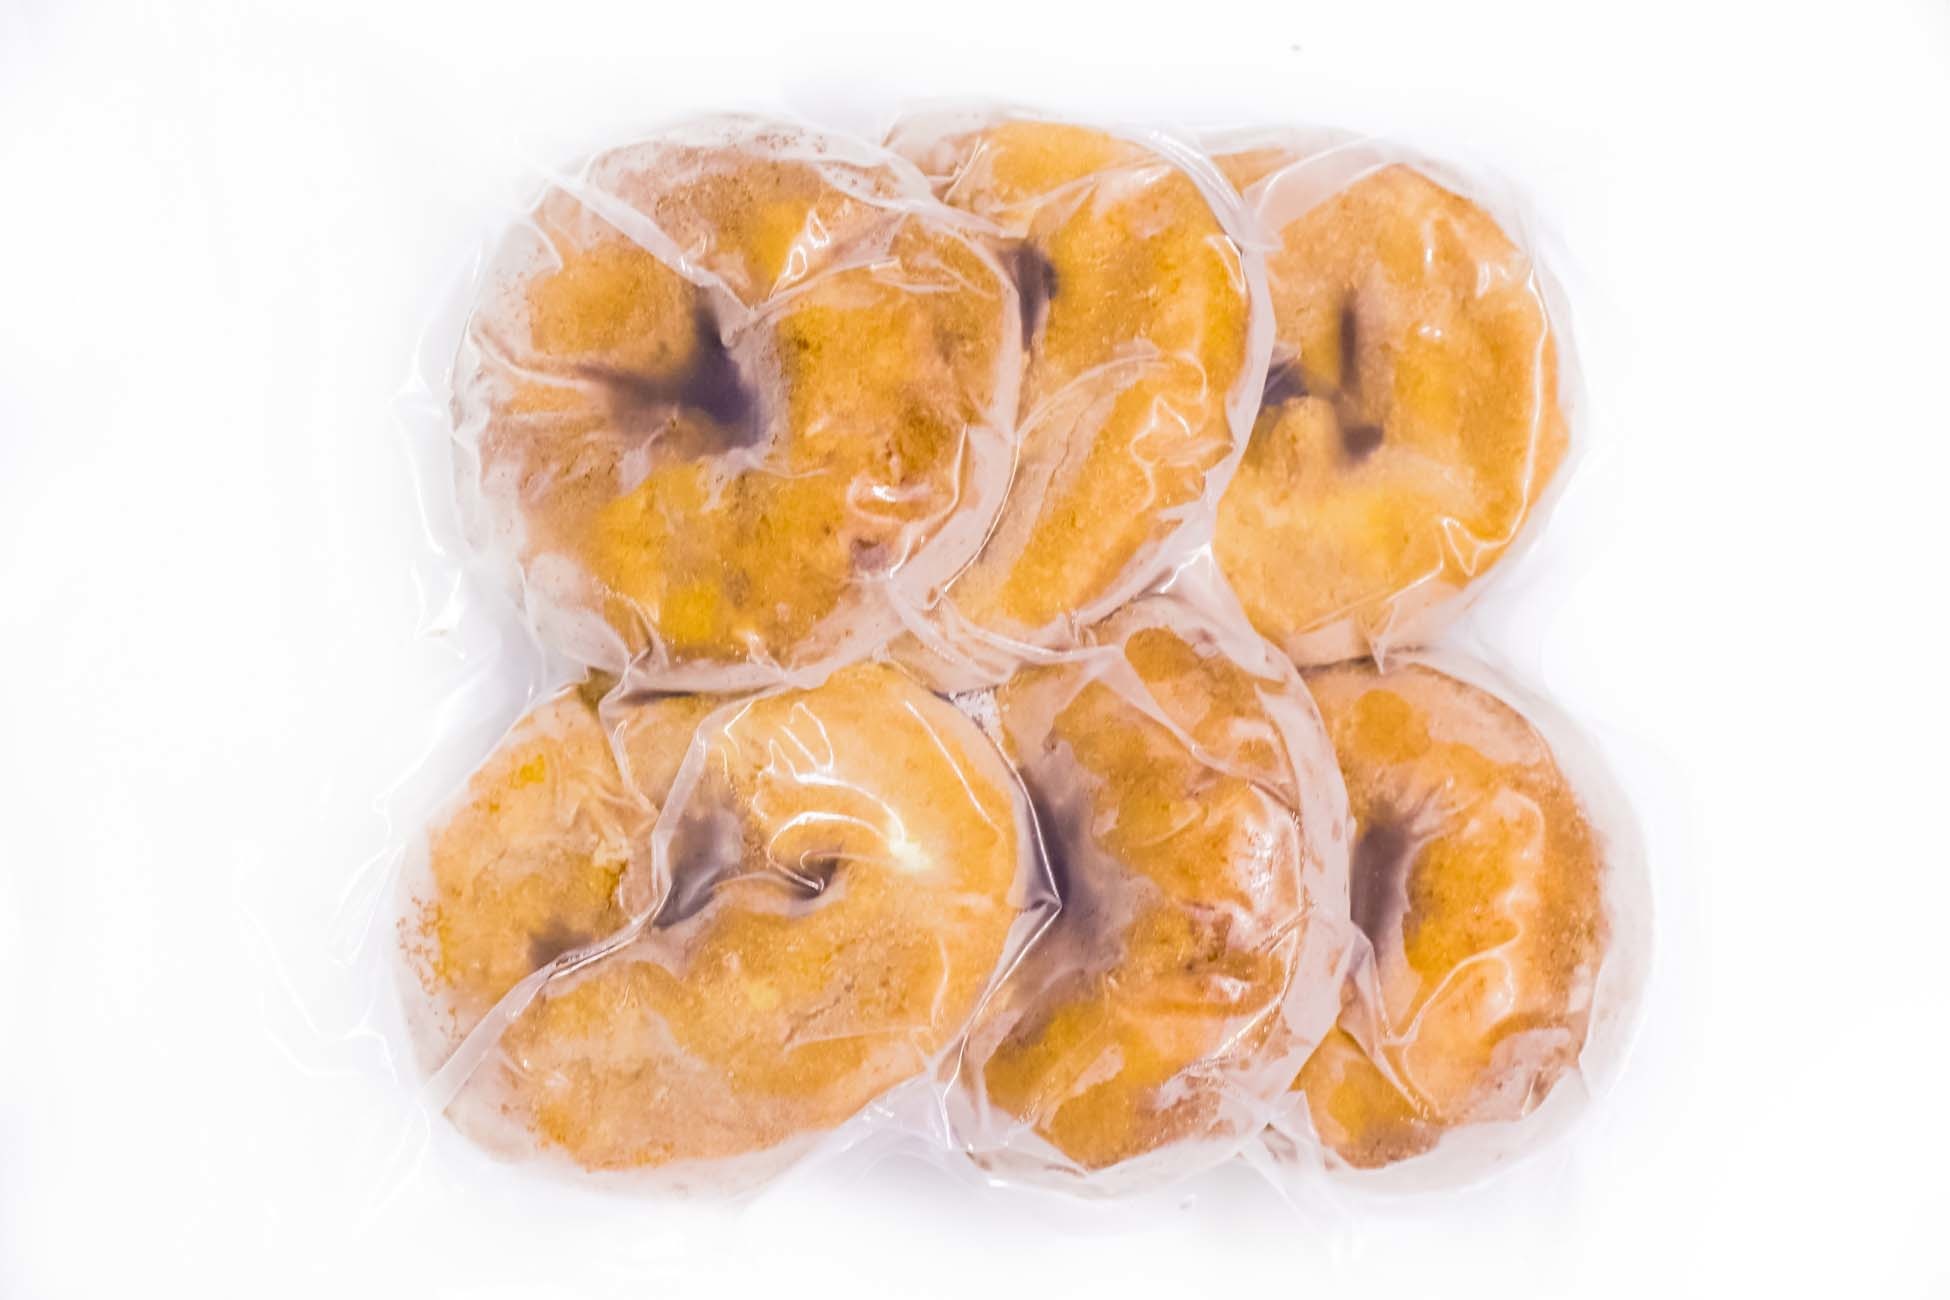 Plain donuts